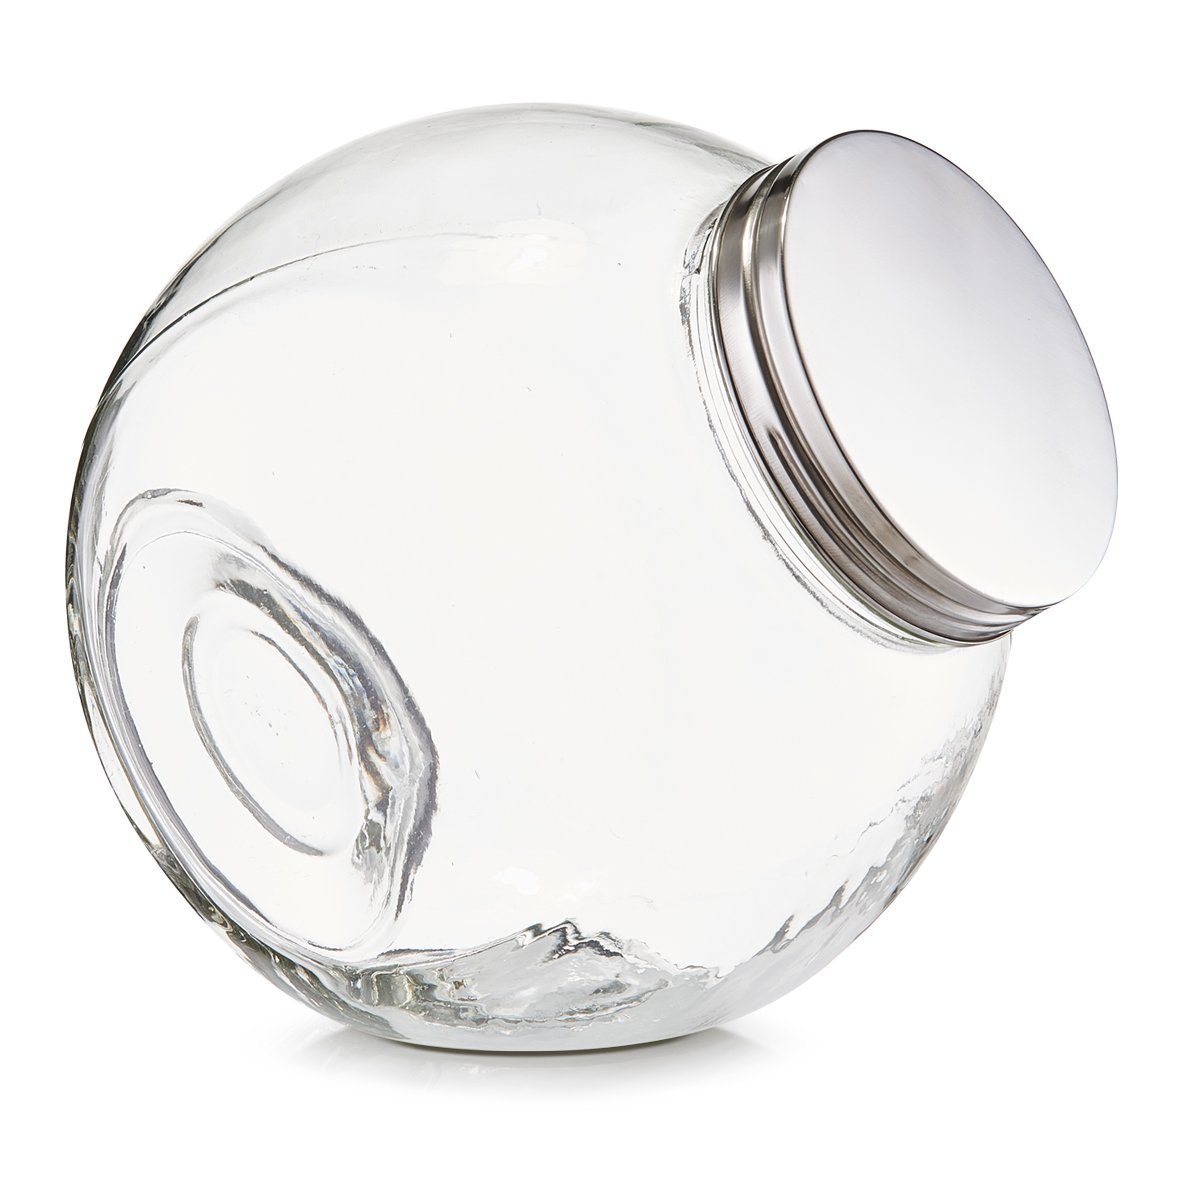 Vorratsglas Vorratsglas 2200 "Candy, 410, 18 18 Glas/Edelstahl Glas/Edelstahl 410, Present Zeller x cm ml, transparent, x 12,5